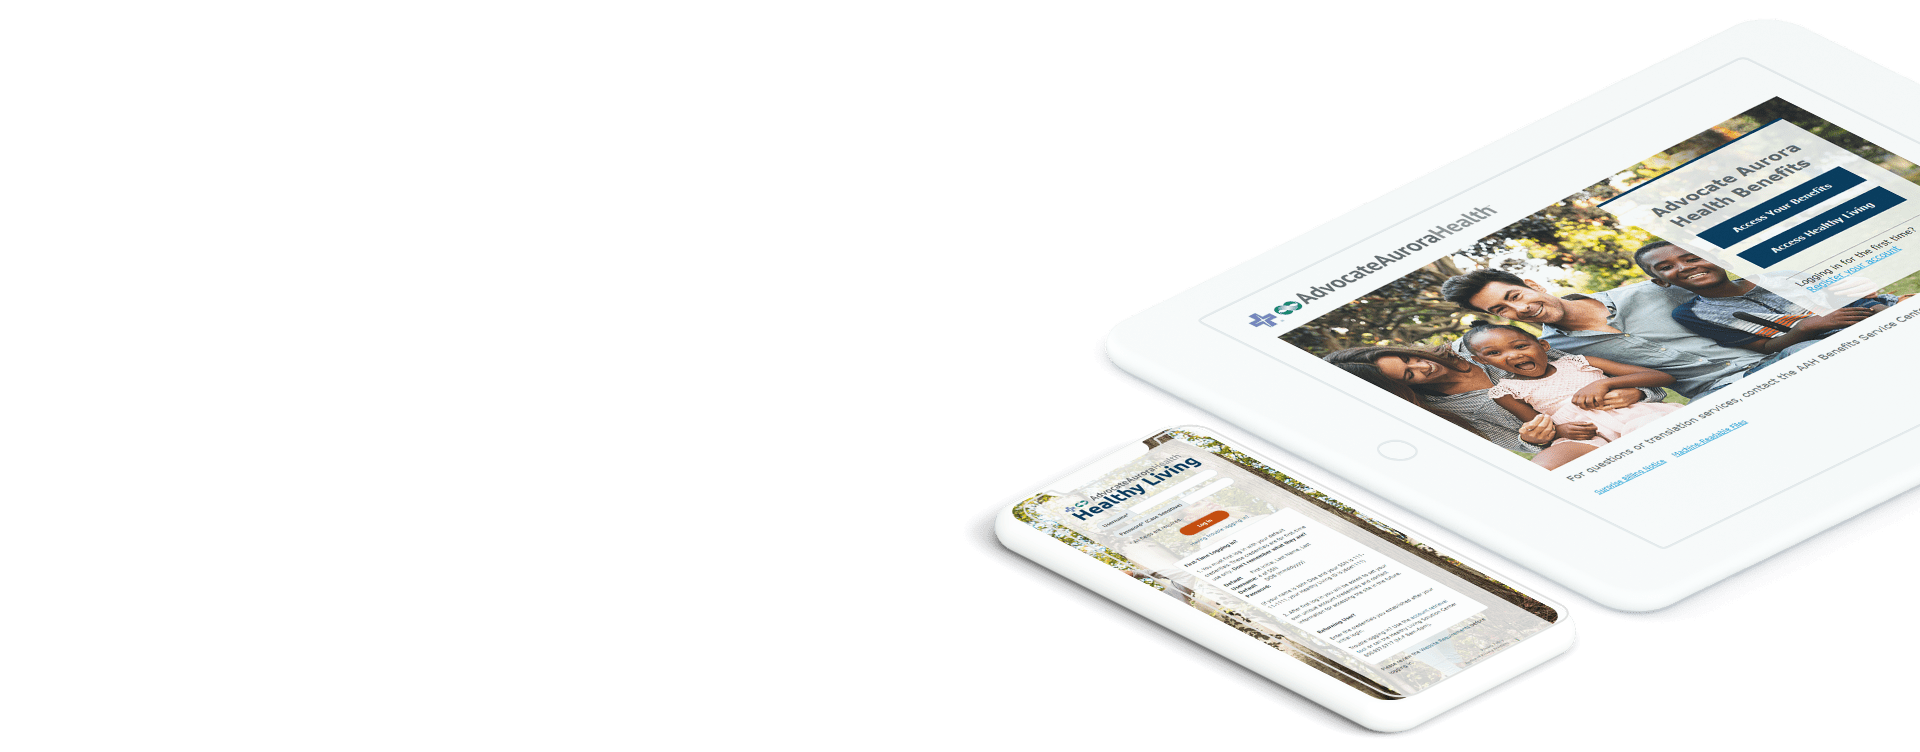 Advocate Aurora Health Sitefinity web design